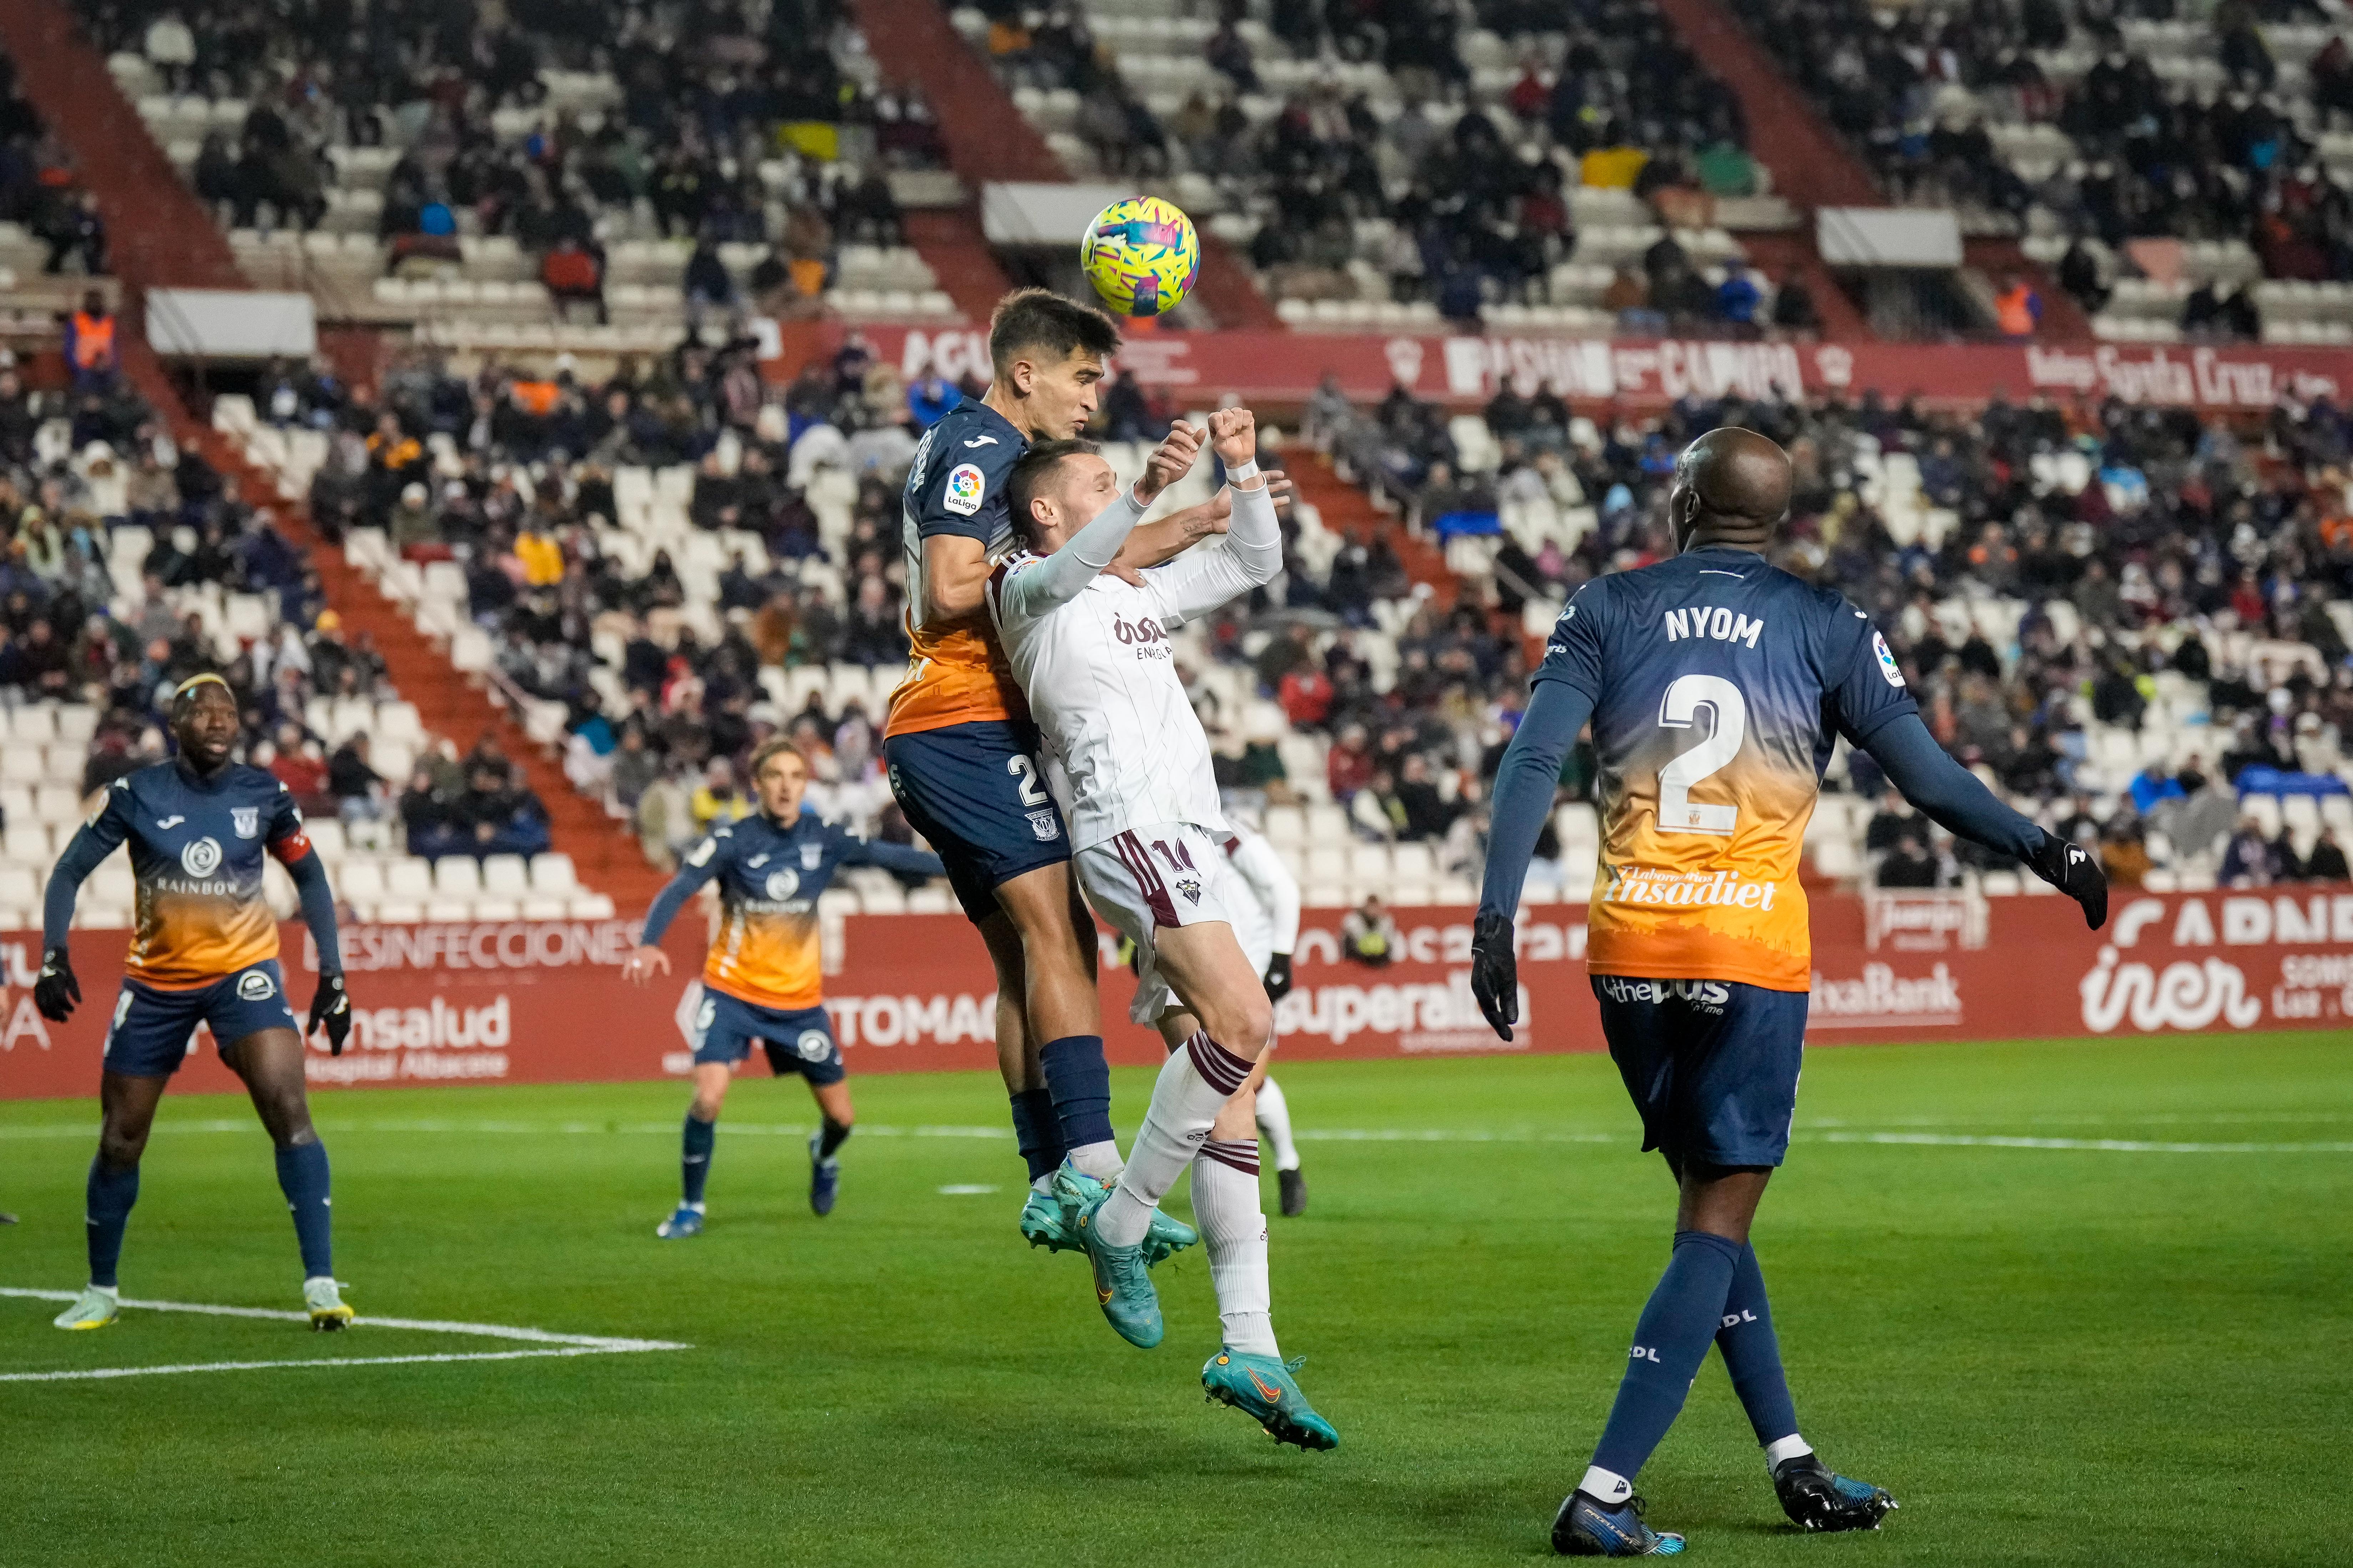 Resumen y goles del Albacete vs Leganés de la Liga SmartBank